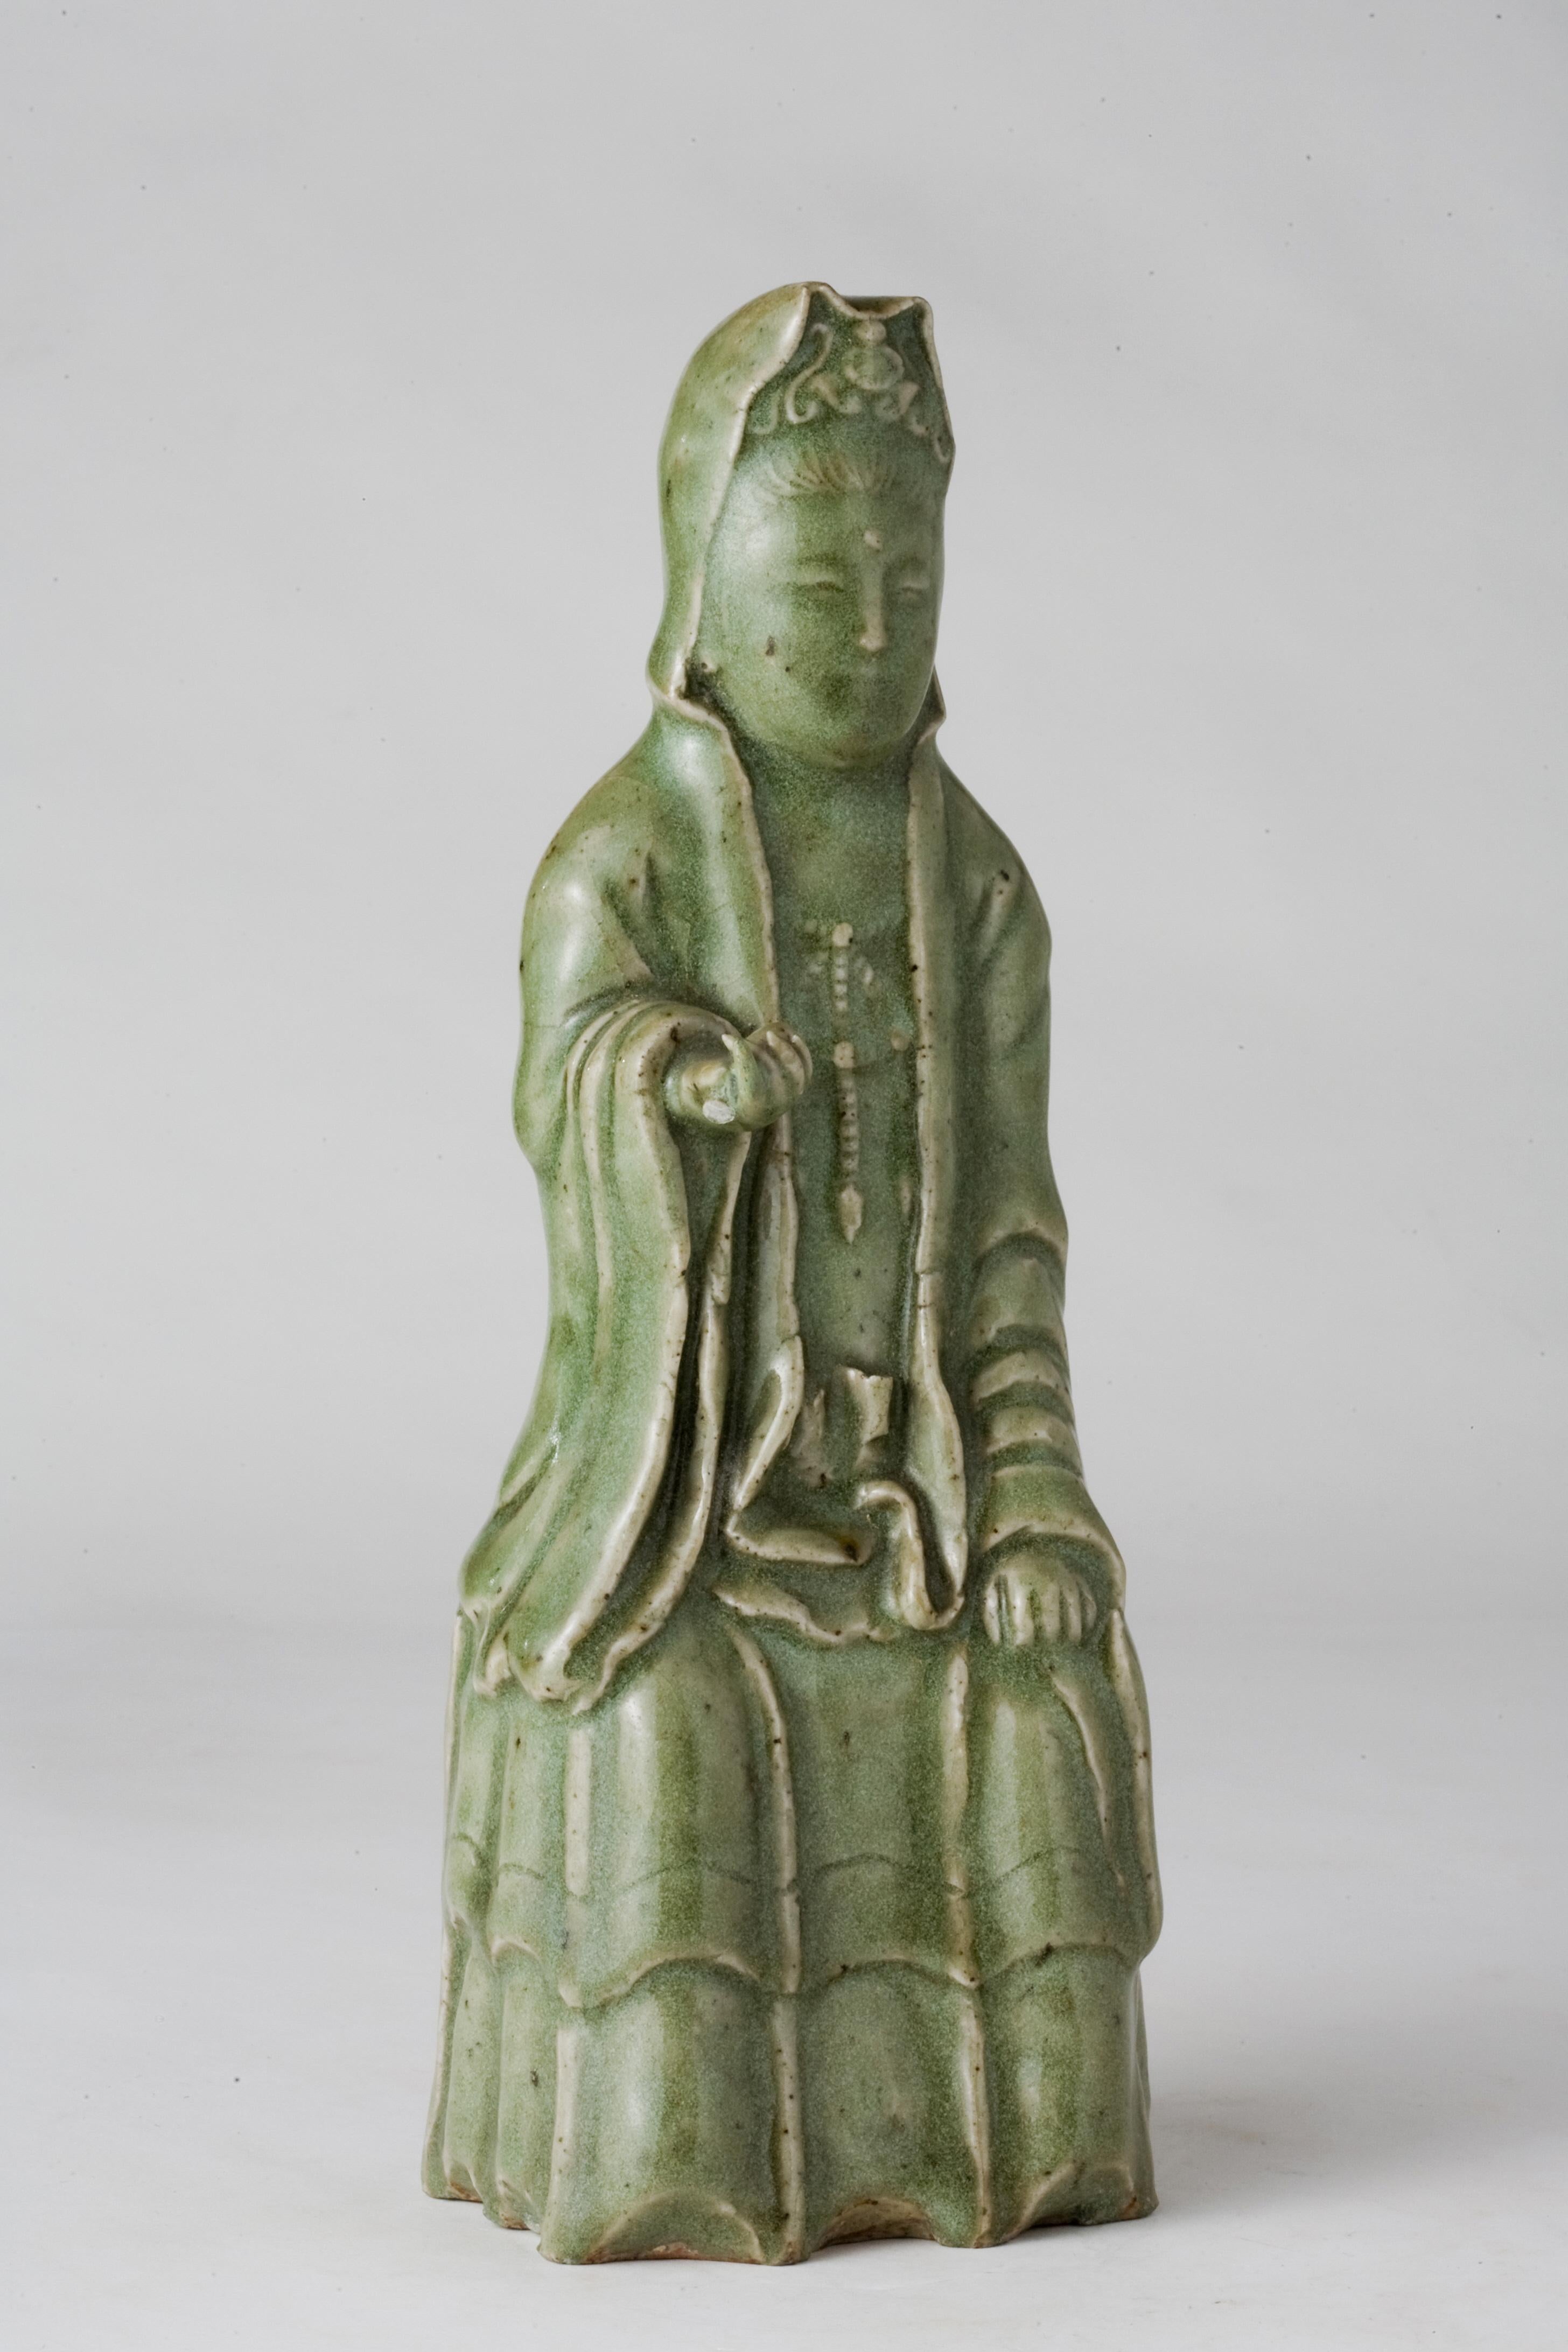 Longquan Celadon Figurine, Ming Dynasty (1368-1644) For Sale 3